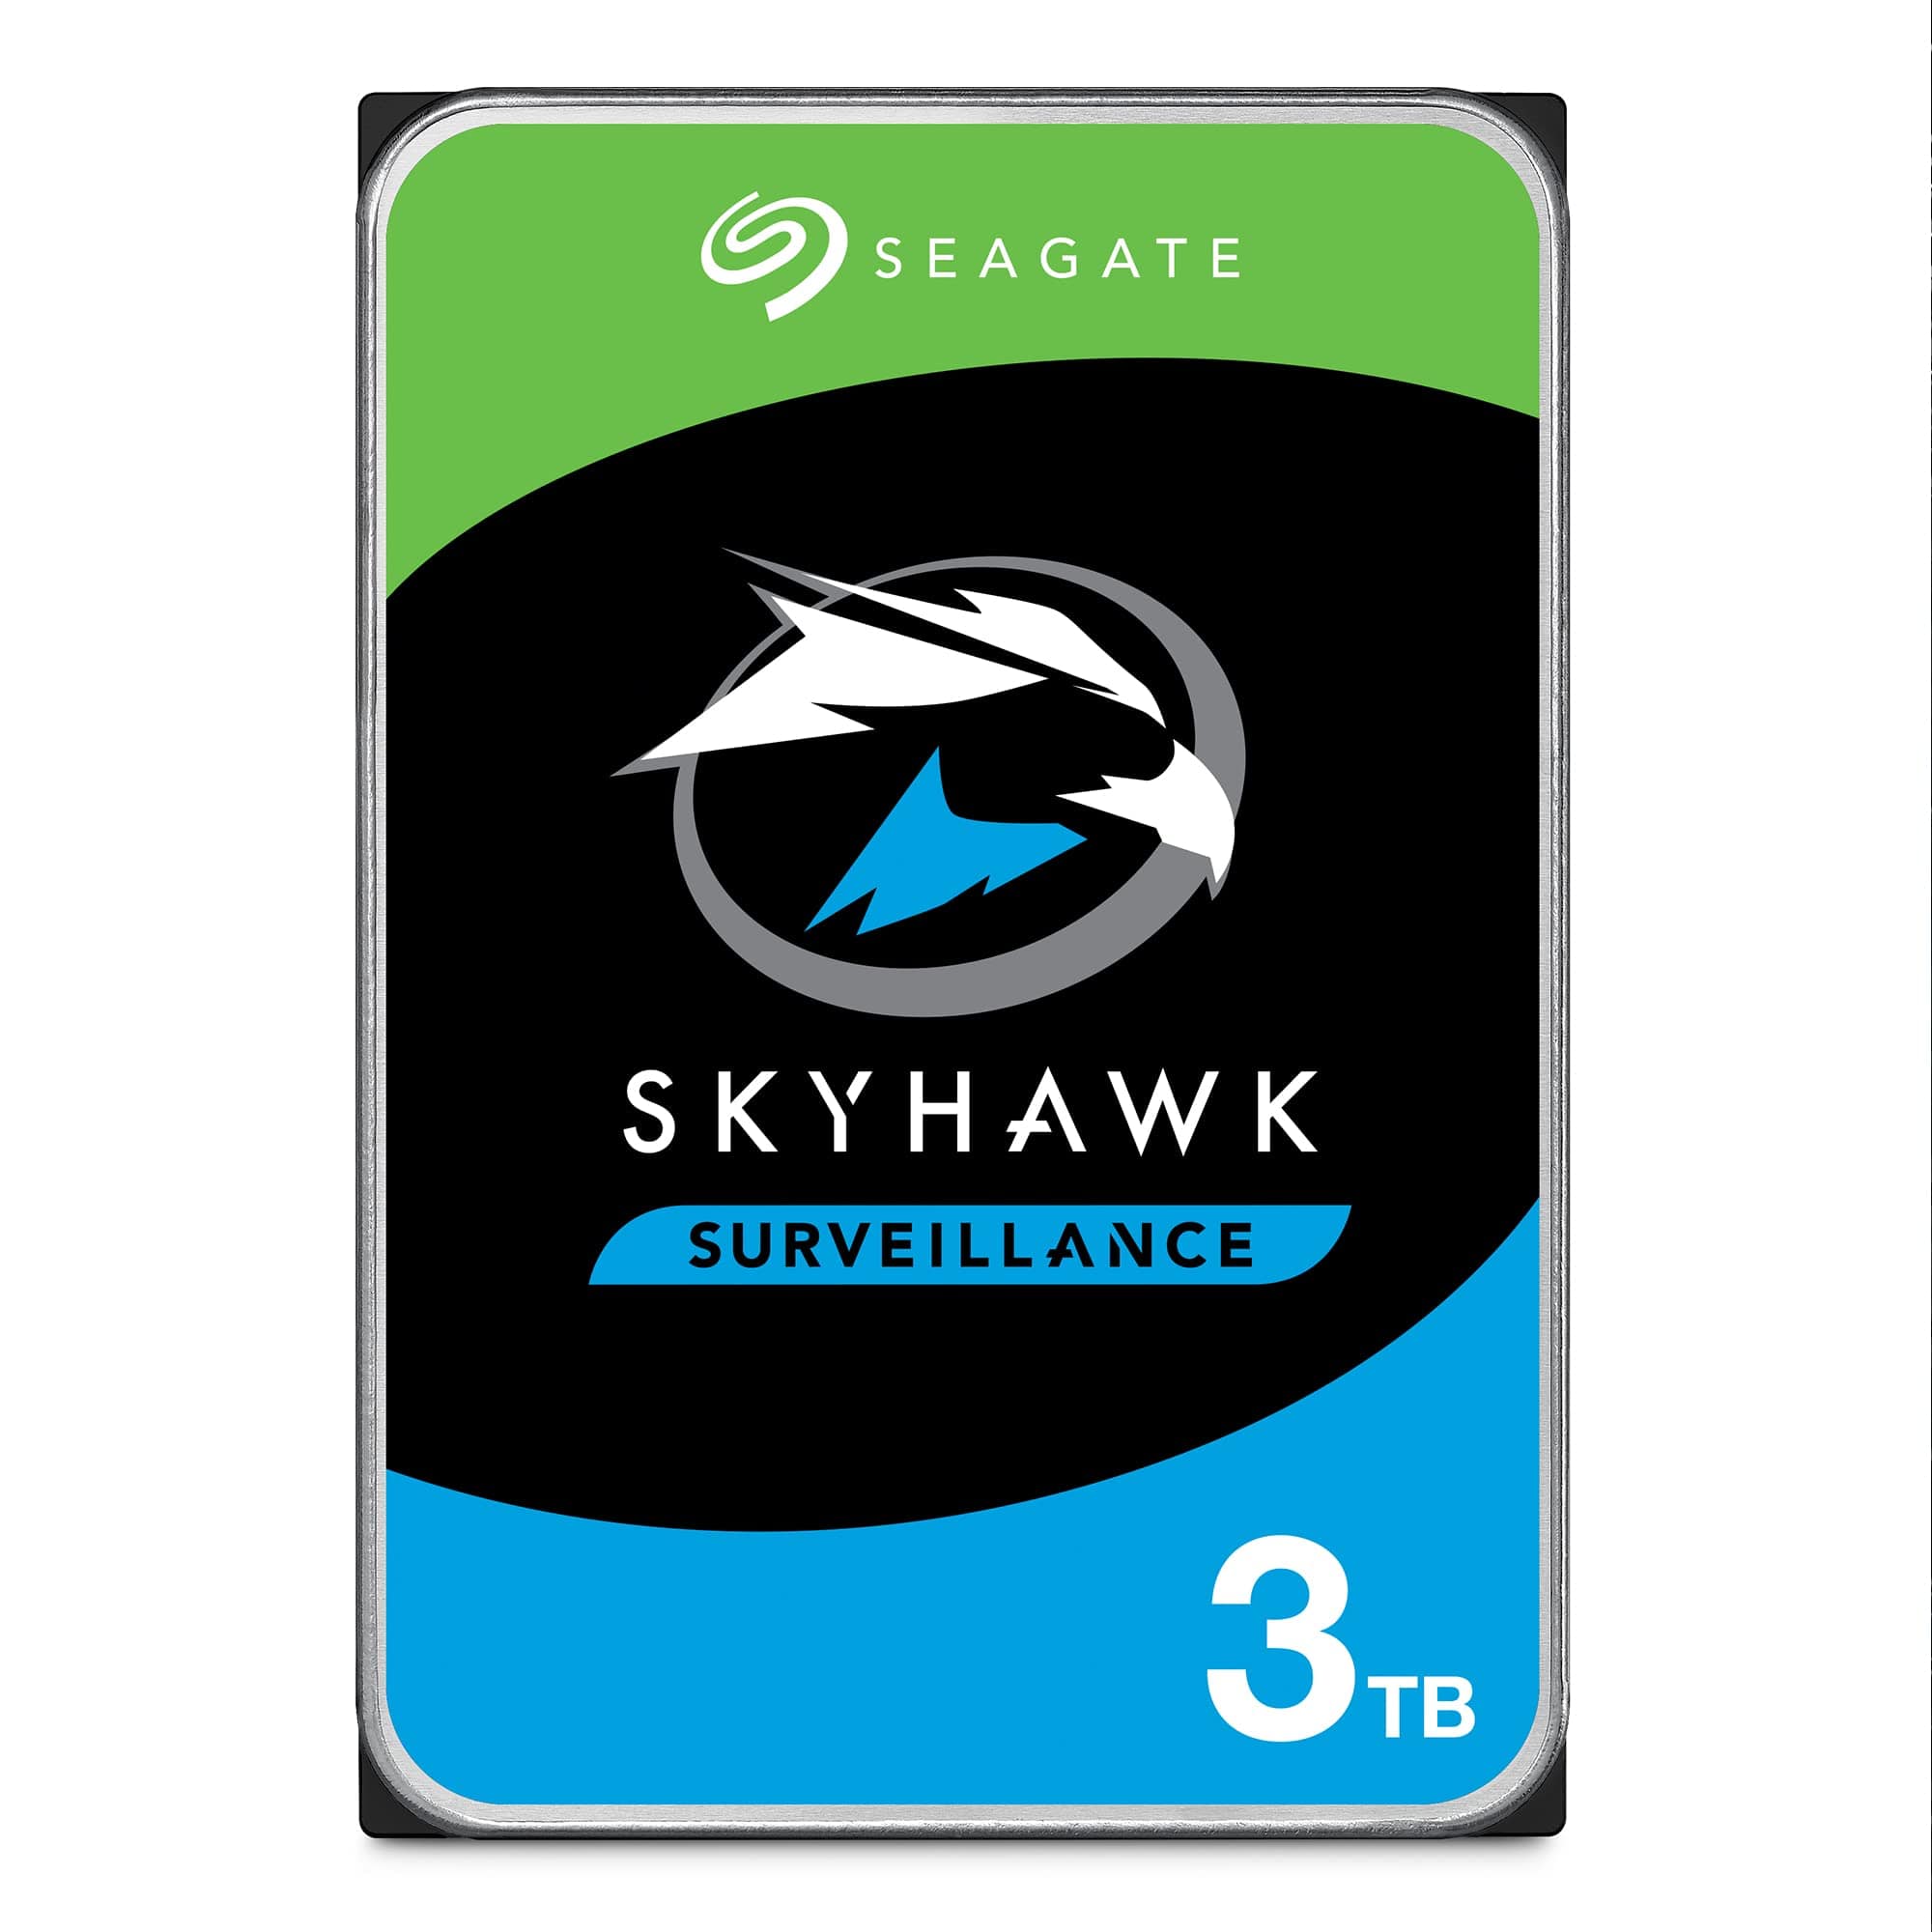 Seagate Skyhawk 3TB 3.5" HDD Surveillance Drives; SATA 6GB/s I